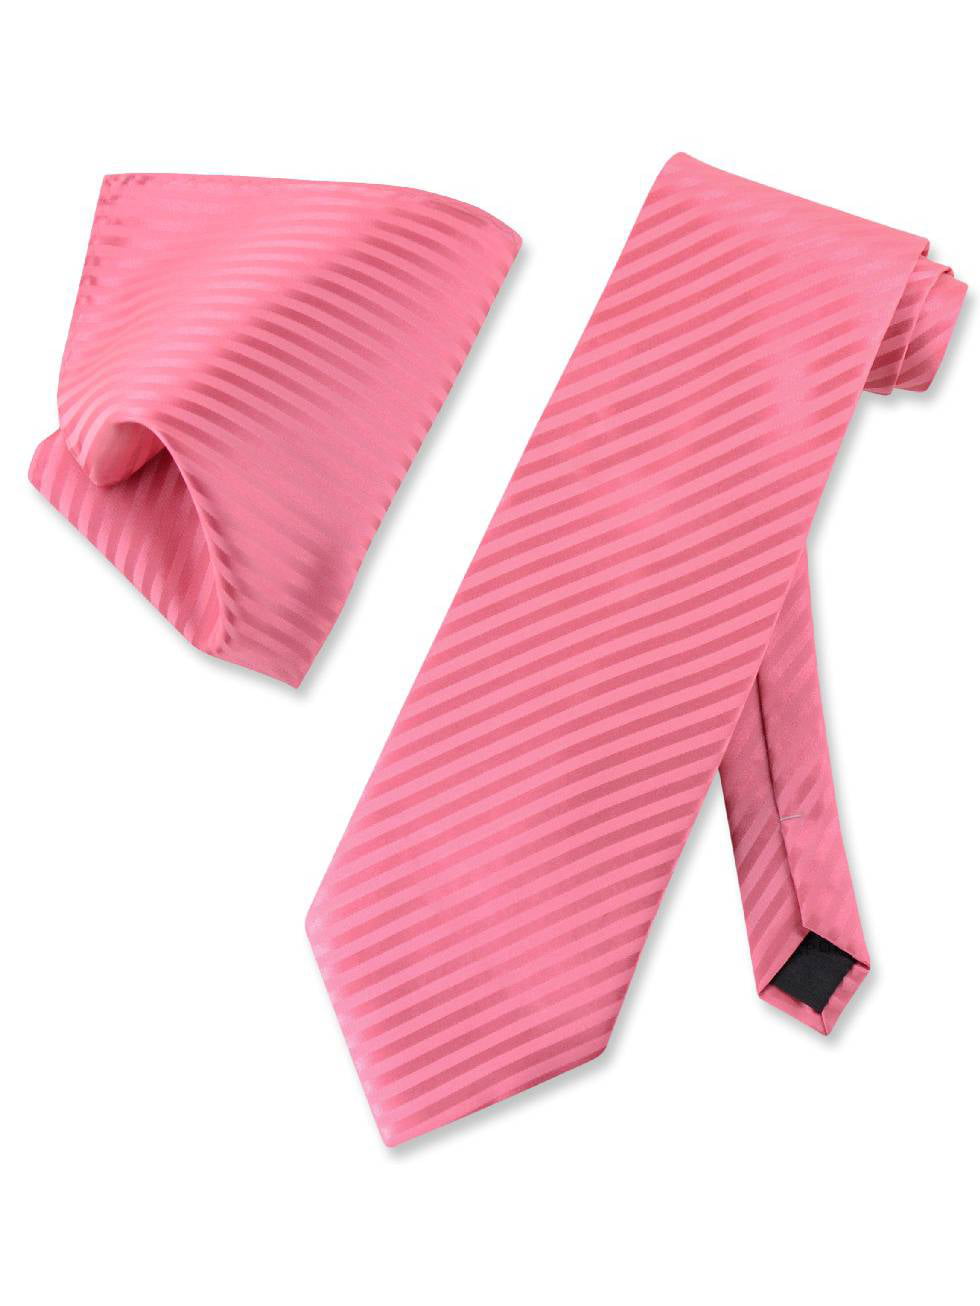 New Polyester Woven Men's Neck Tie necktie & hankie set Stripes coral wedding 